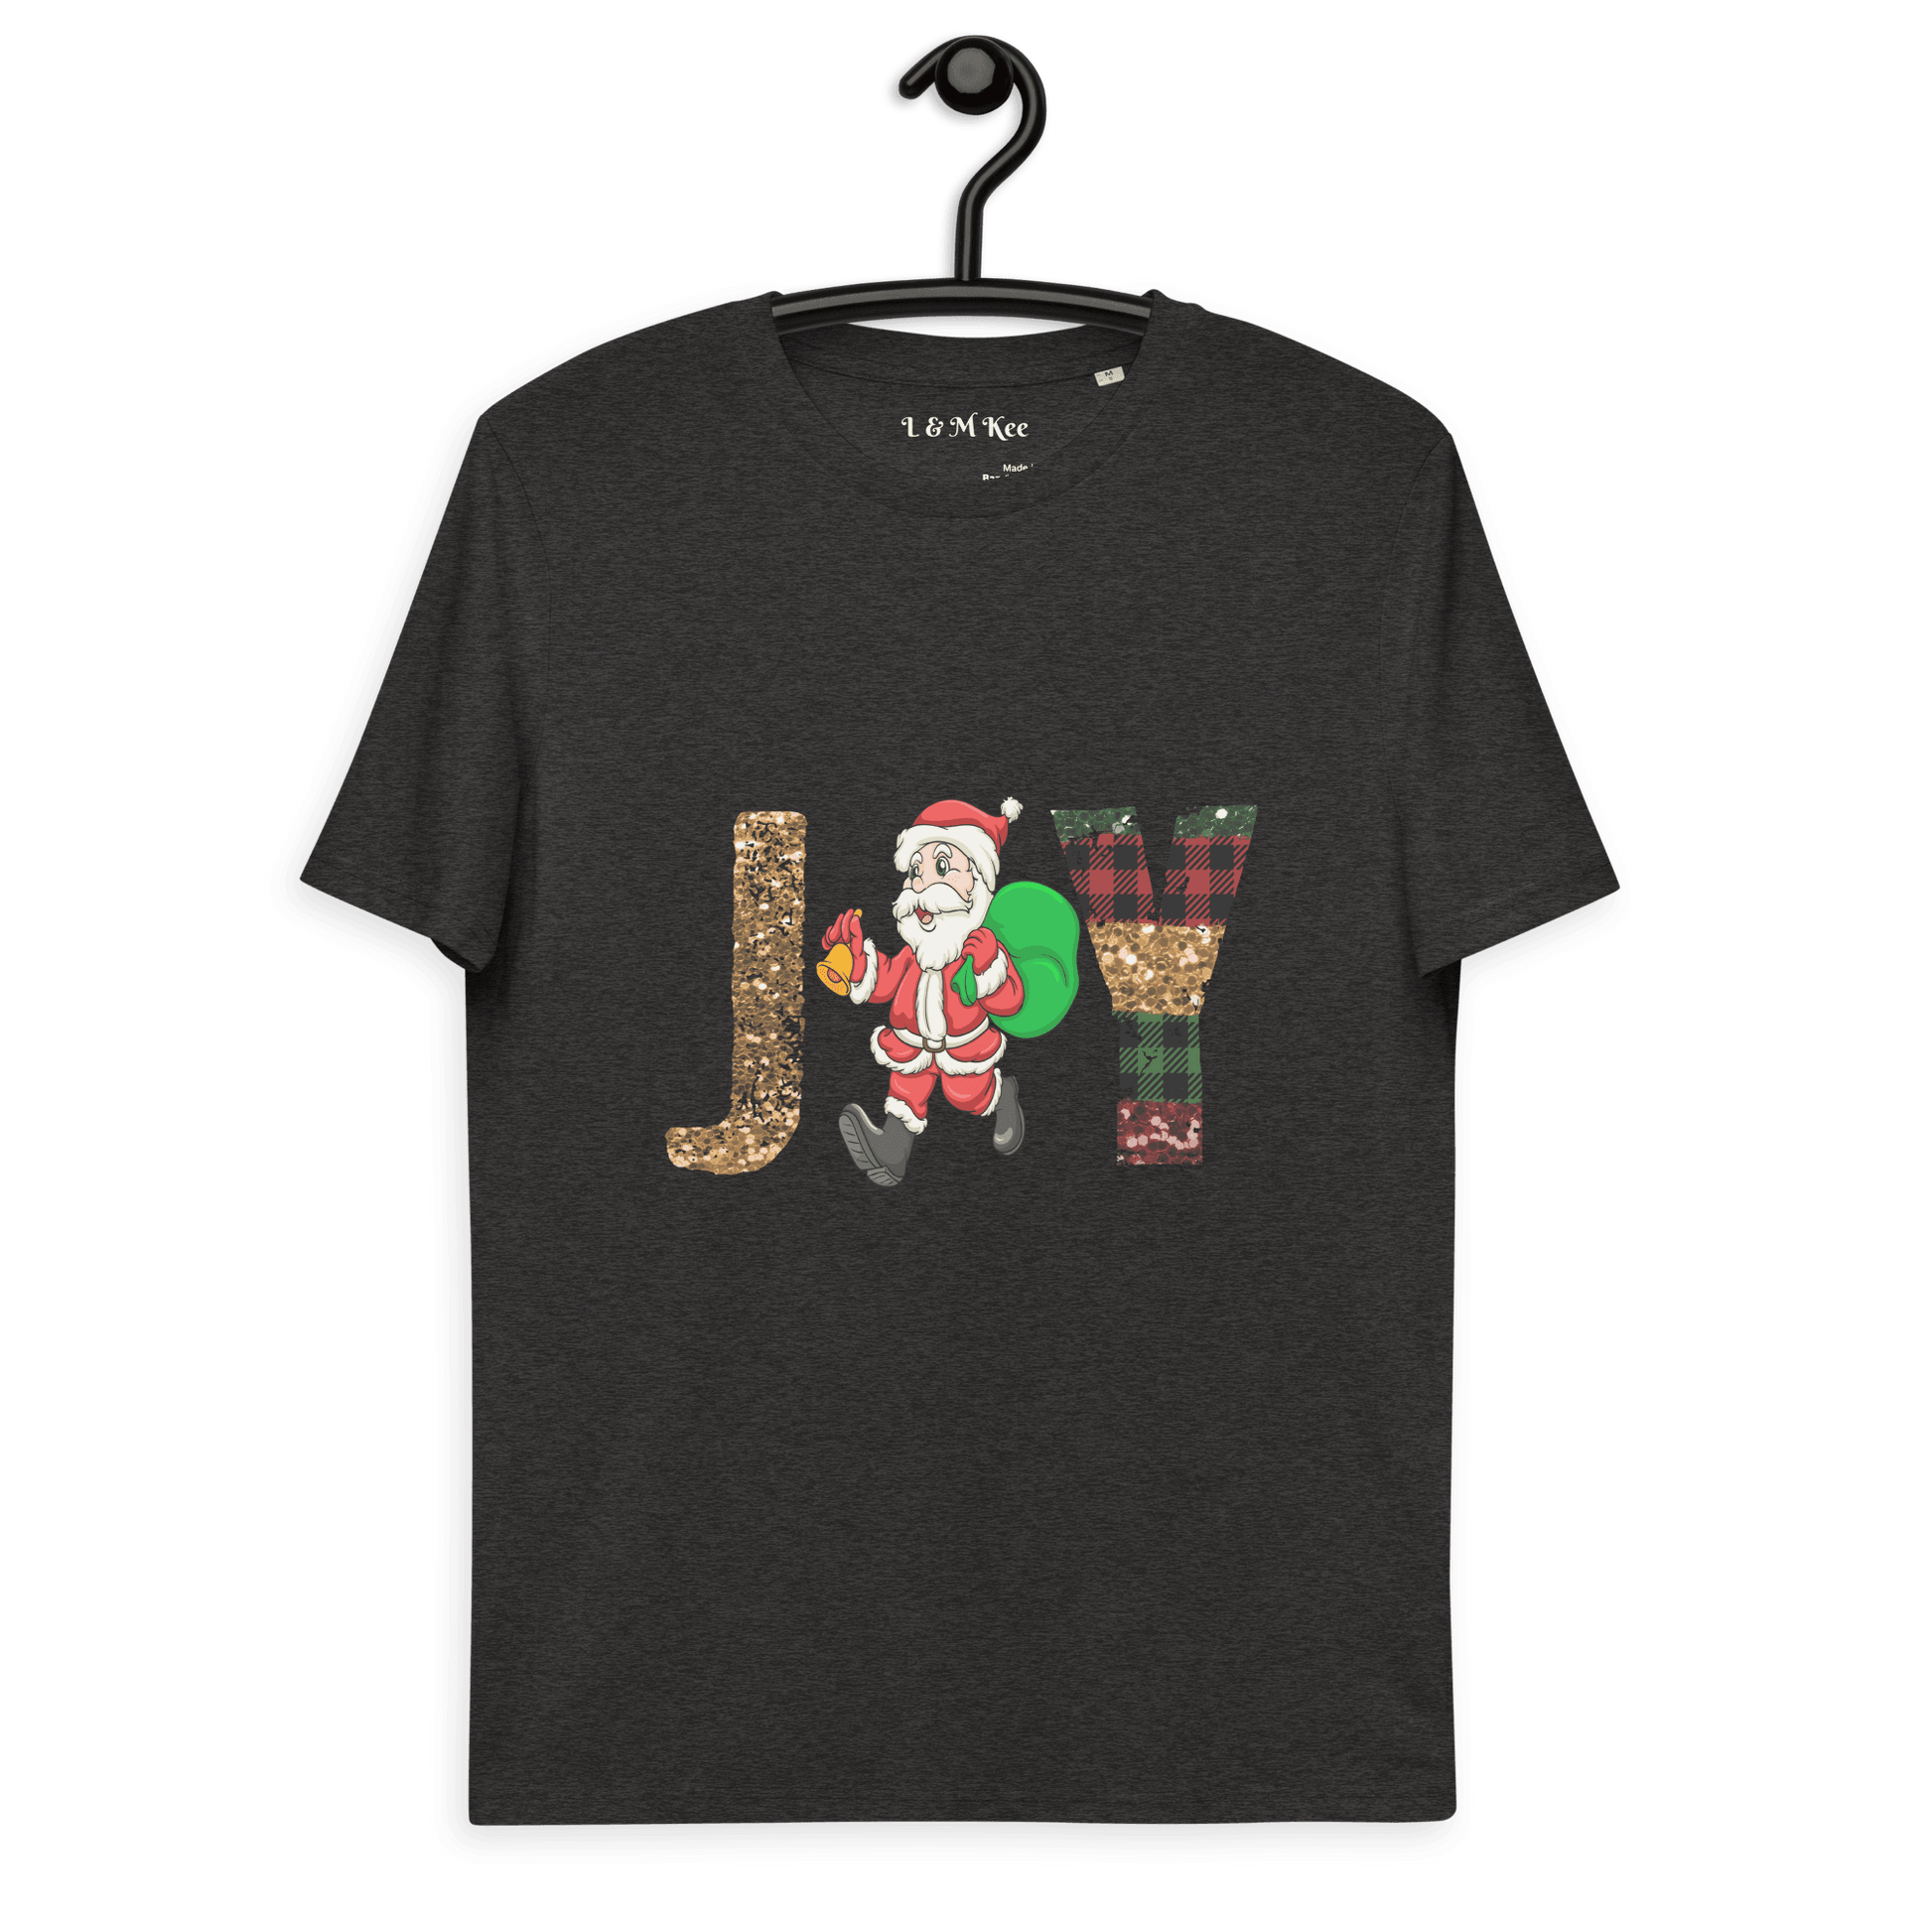 Joy Unisex Organic Cotton T-shirt - L & M Kee, LLC